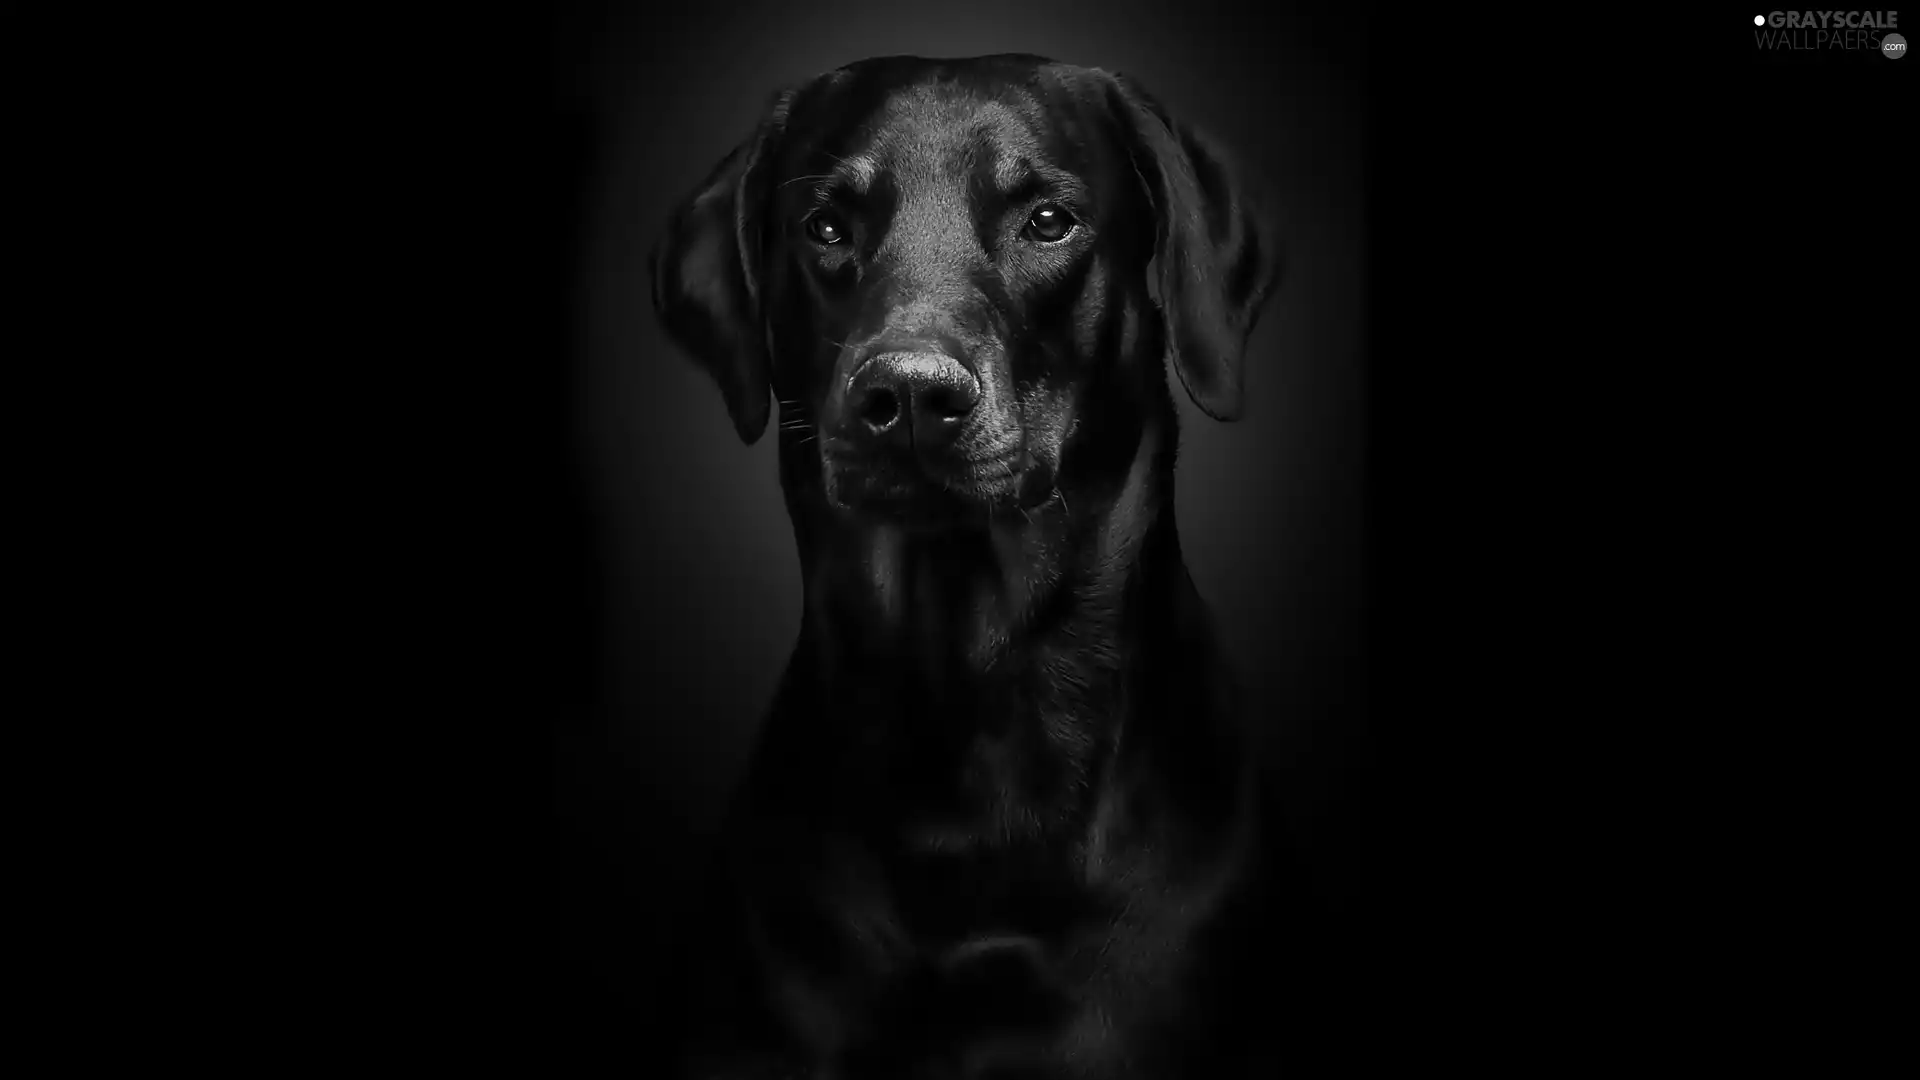 Doberman, Black, background, portrait